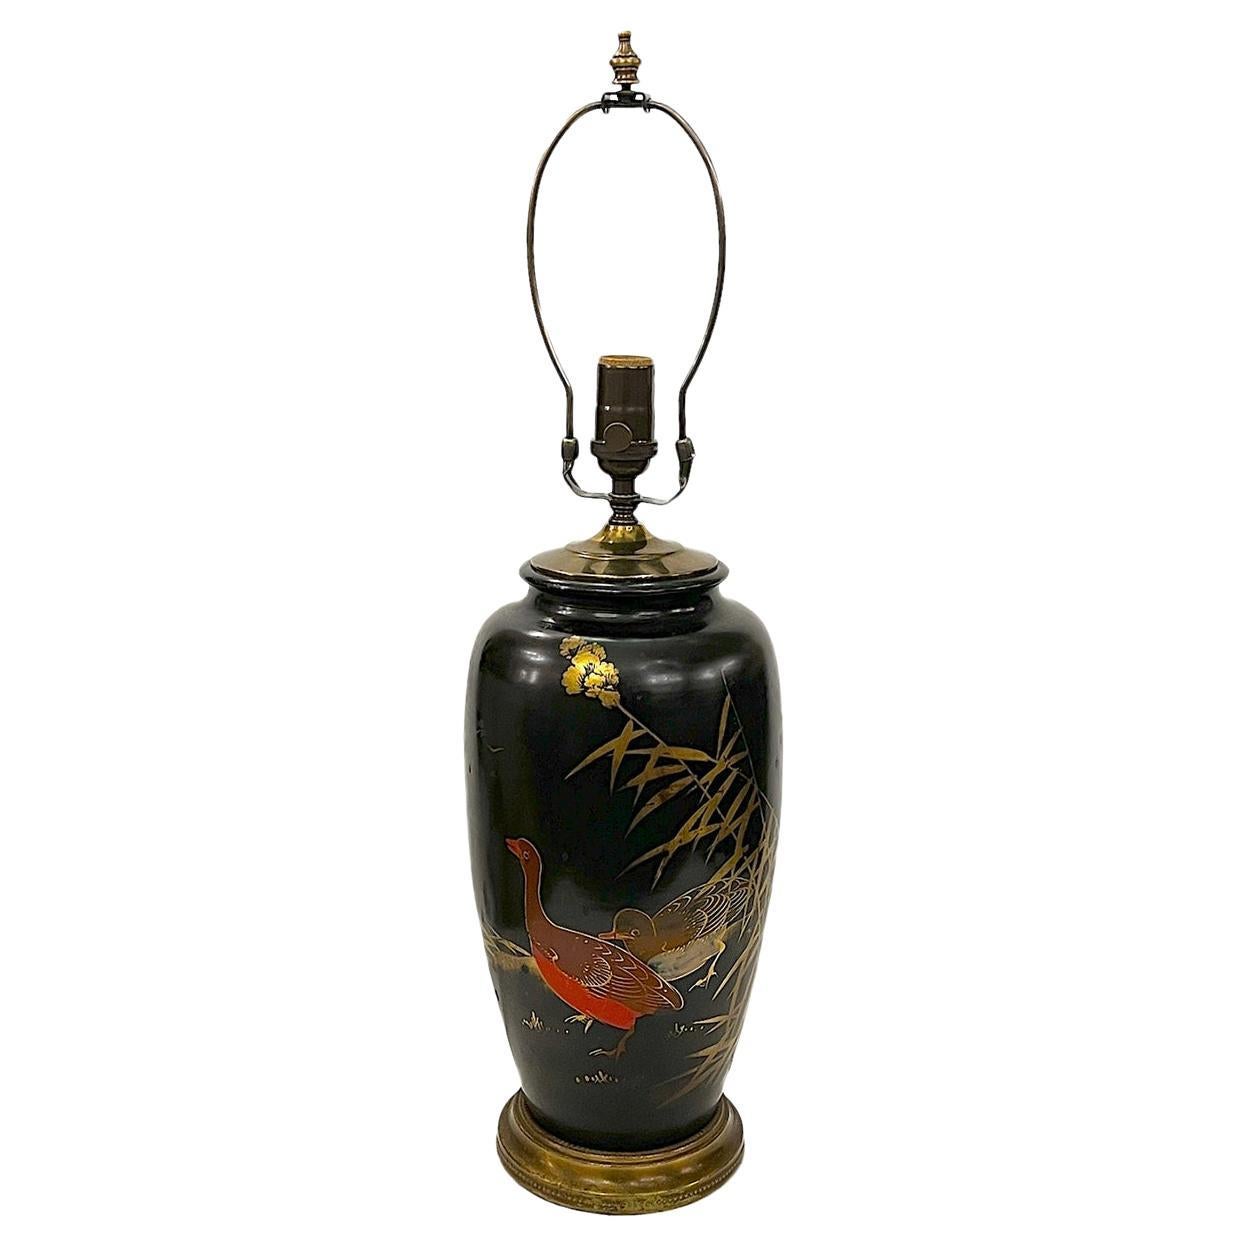 Antique Japanese Lamp